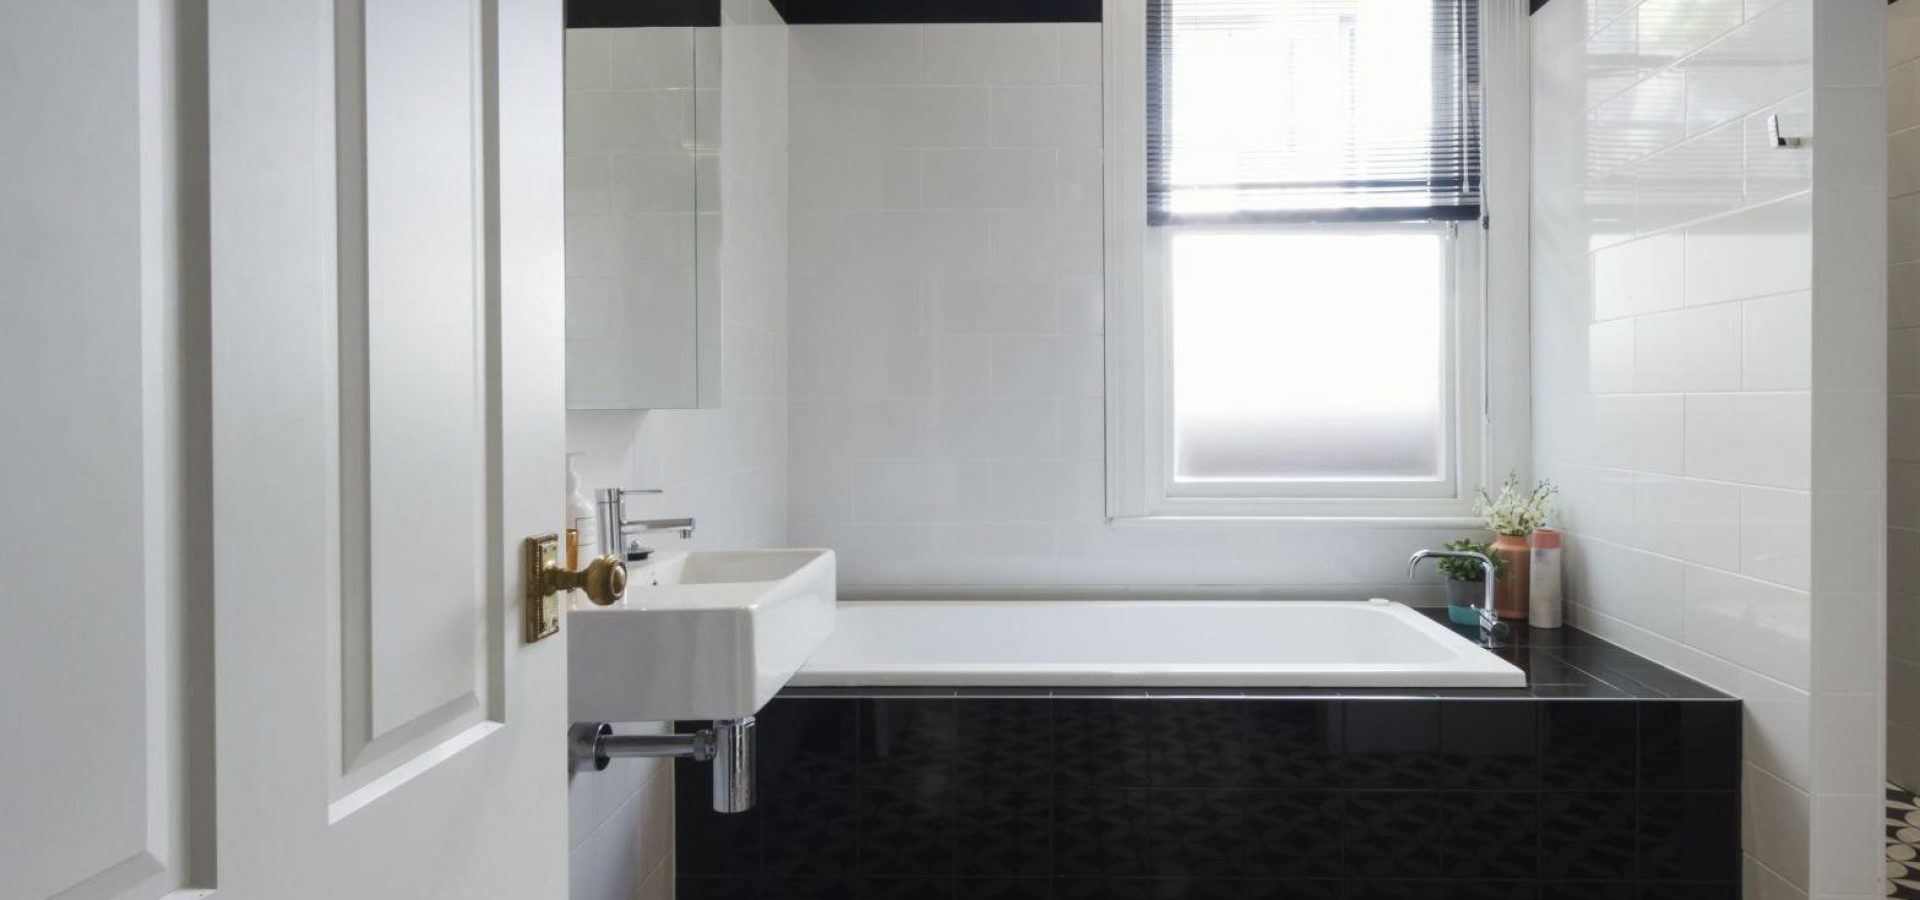 Choosing the perfect bathroom tile design